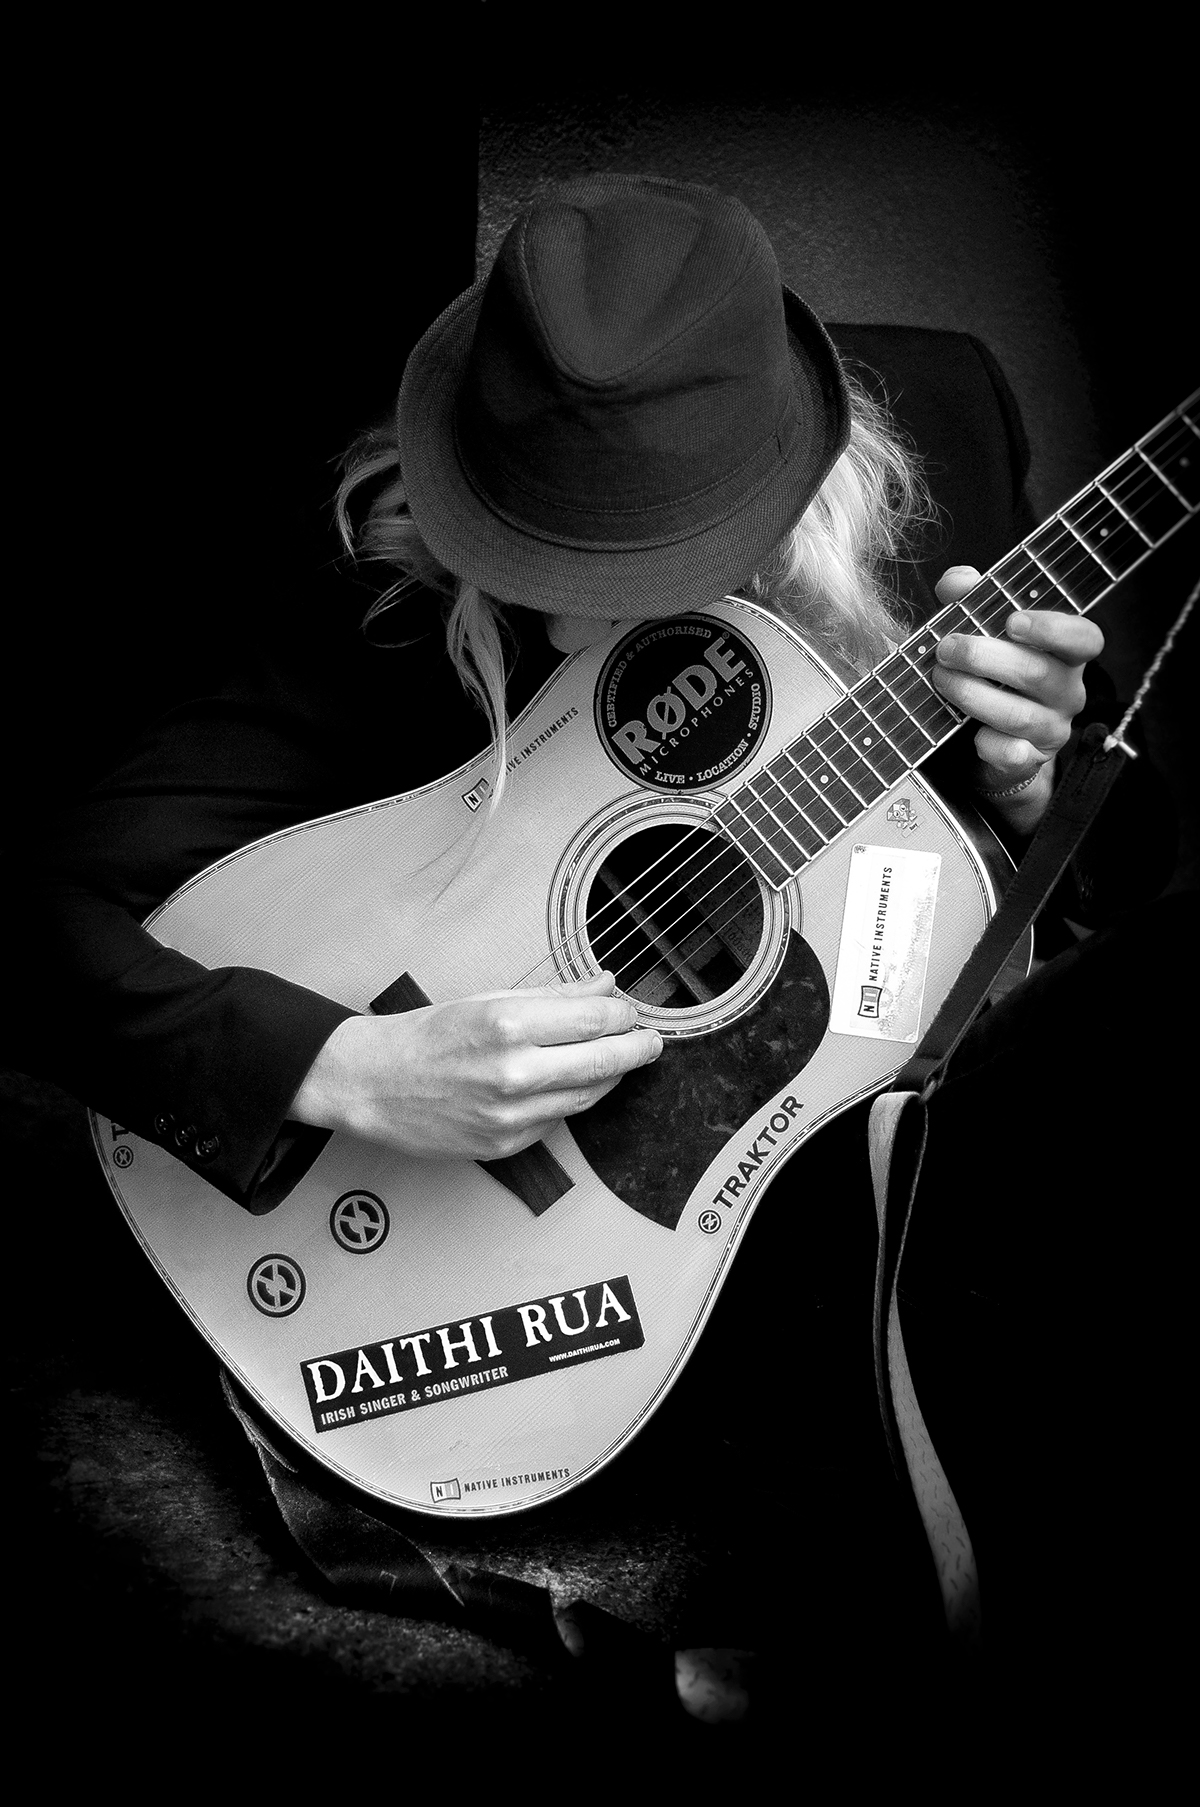 dublin Ireland irish musician busker guitar templebar black and white portrait street photography Urban city rock playing monochrome